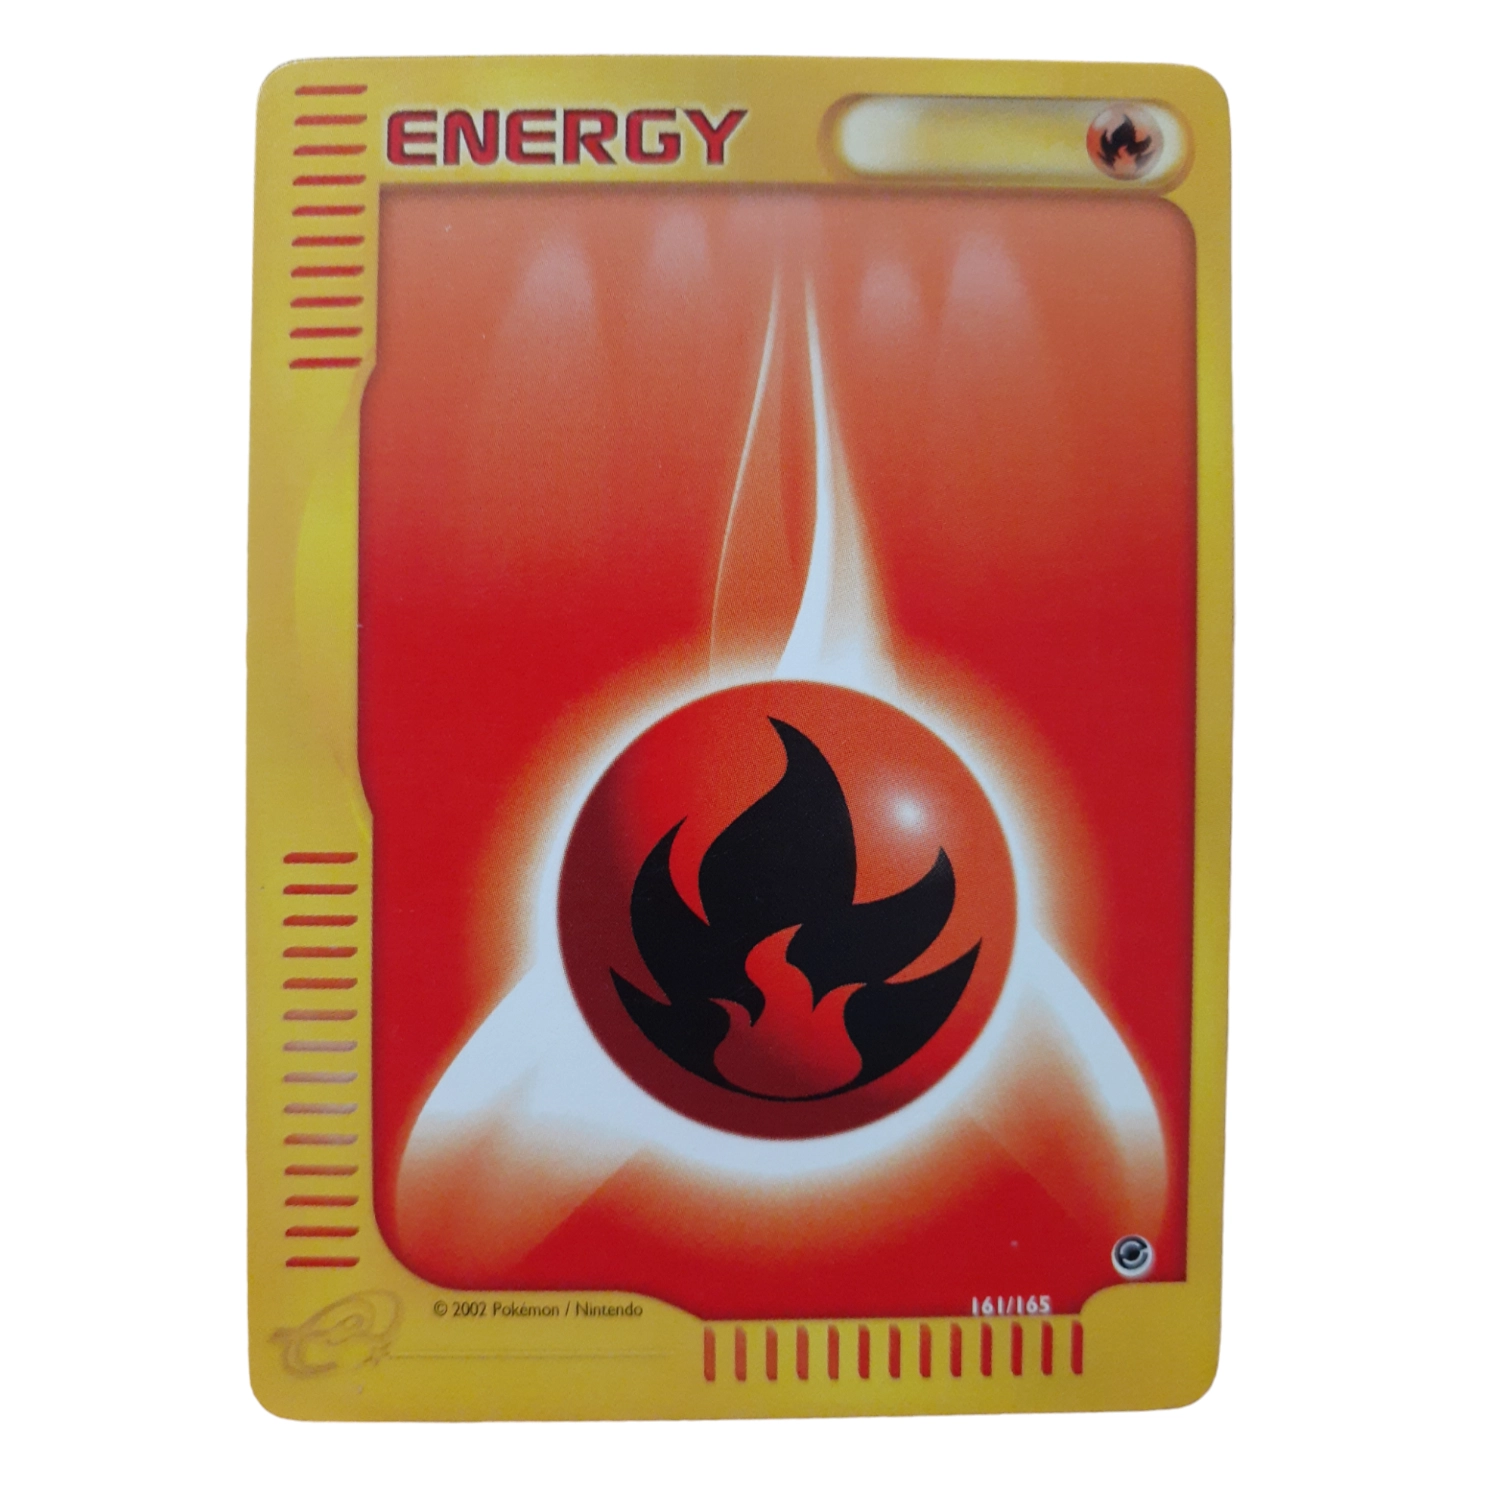 161/165 - Energy (fire)